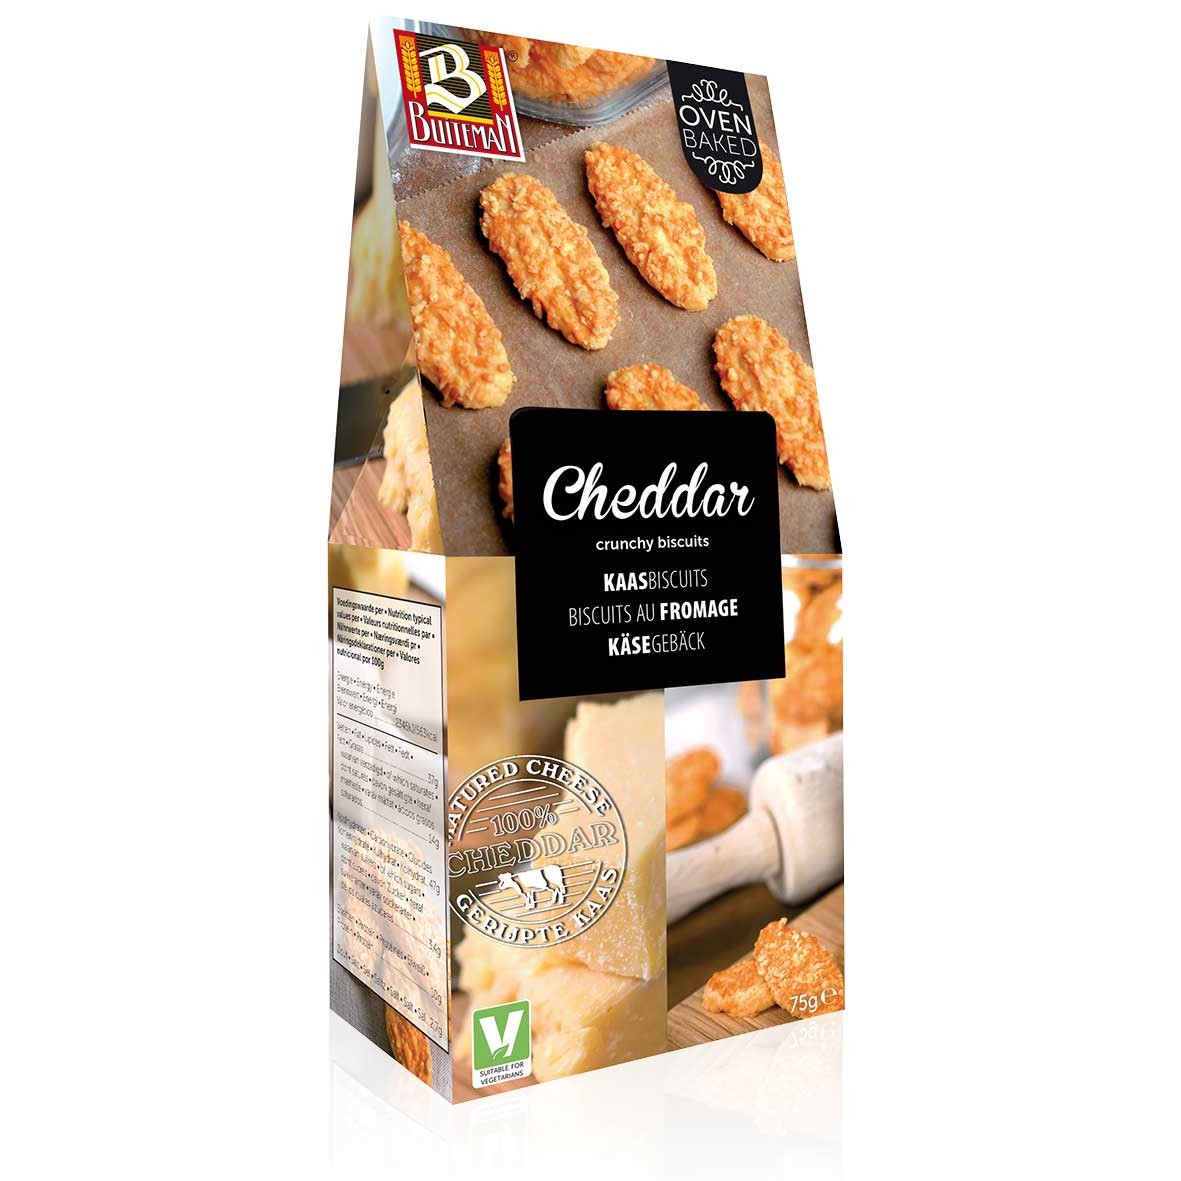 Cheddar Käsegebäck biscuits Buiteman | MHD 13.02.25